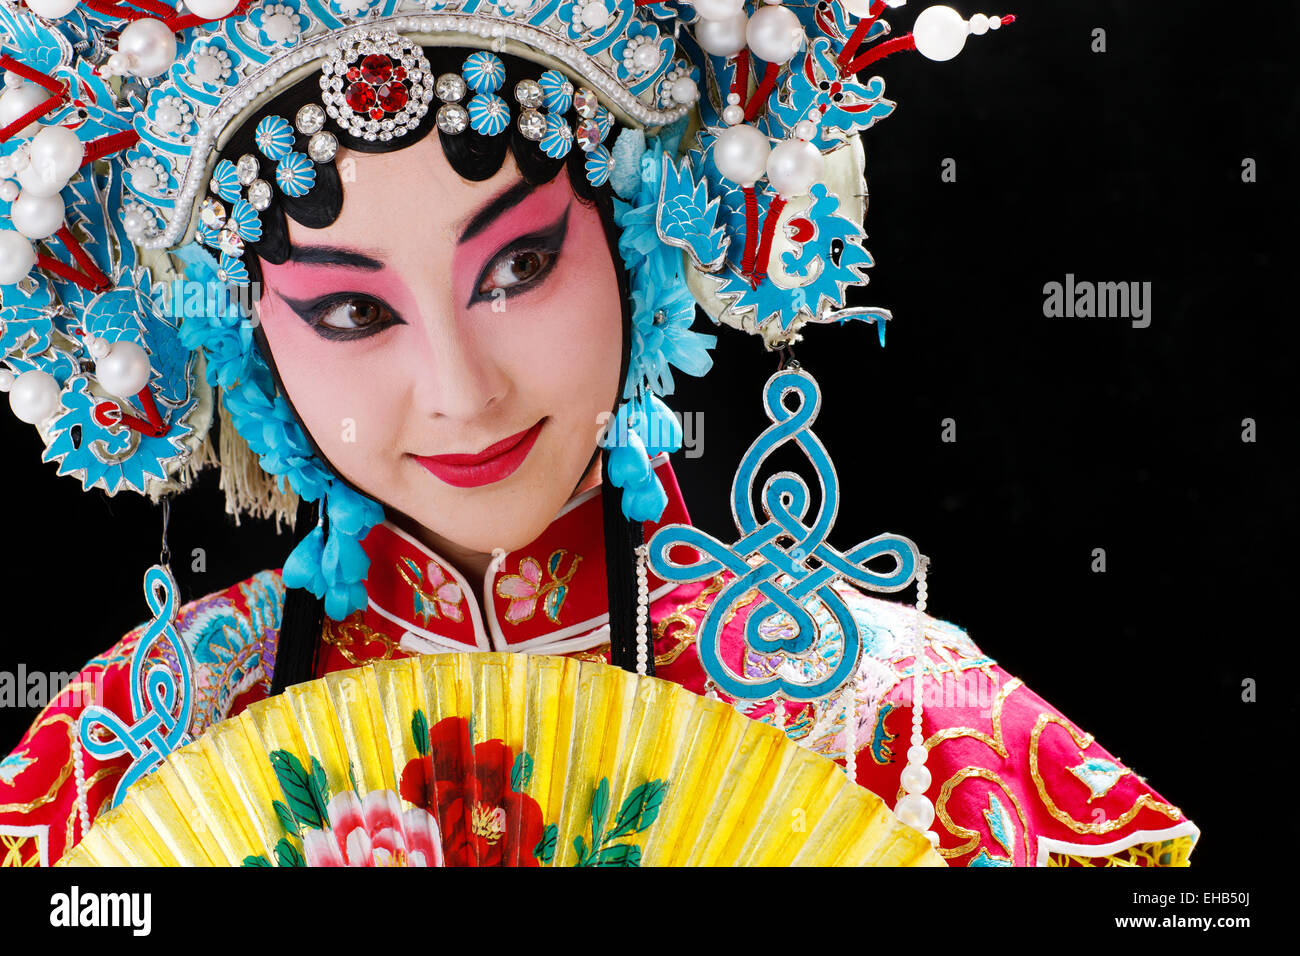 Female Peking Opera performer with a folding fan Stock Photo